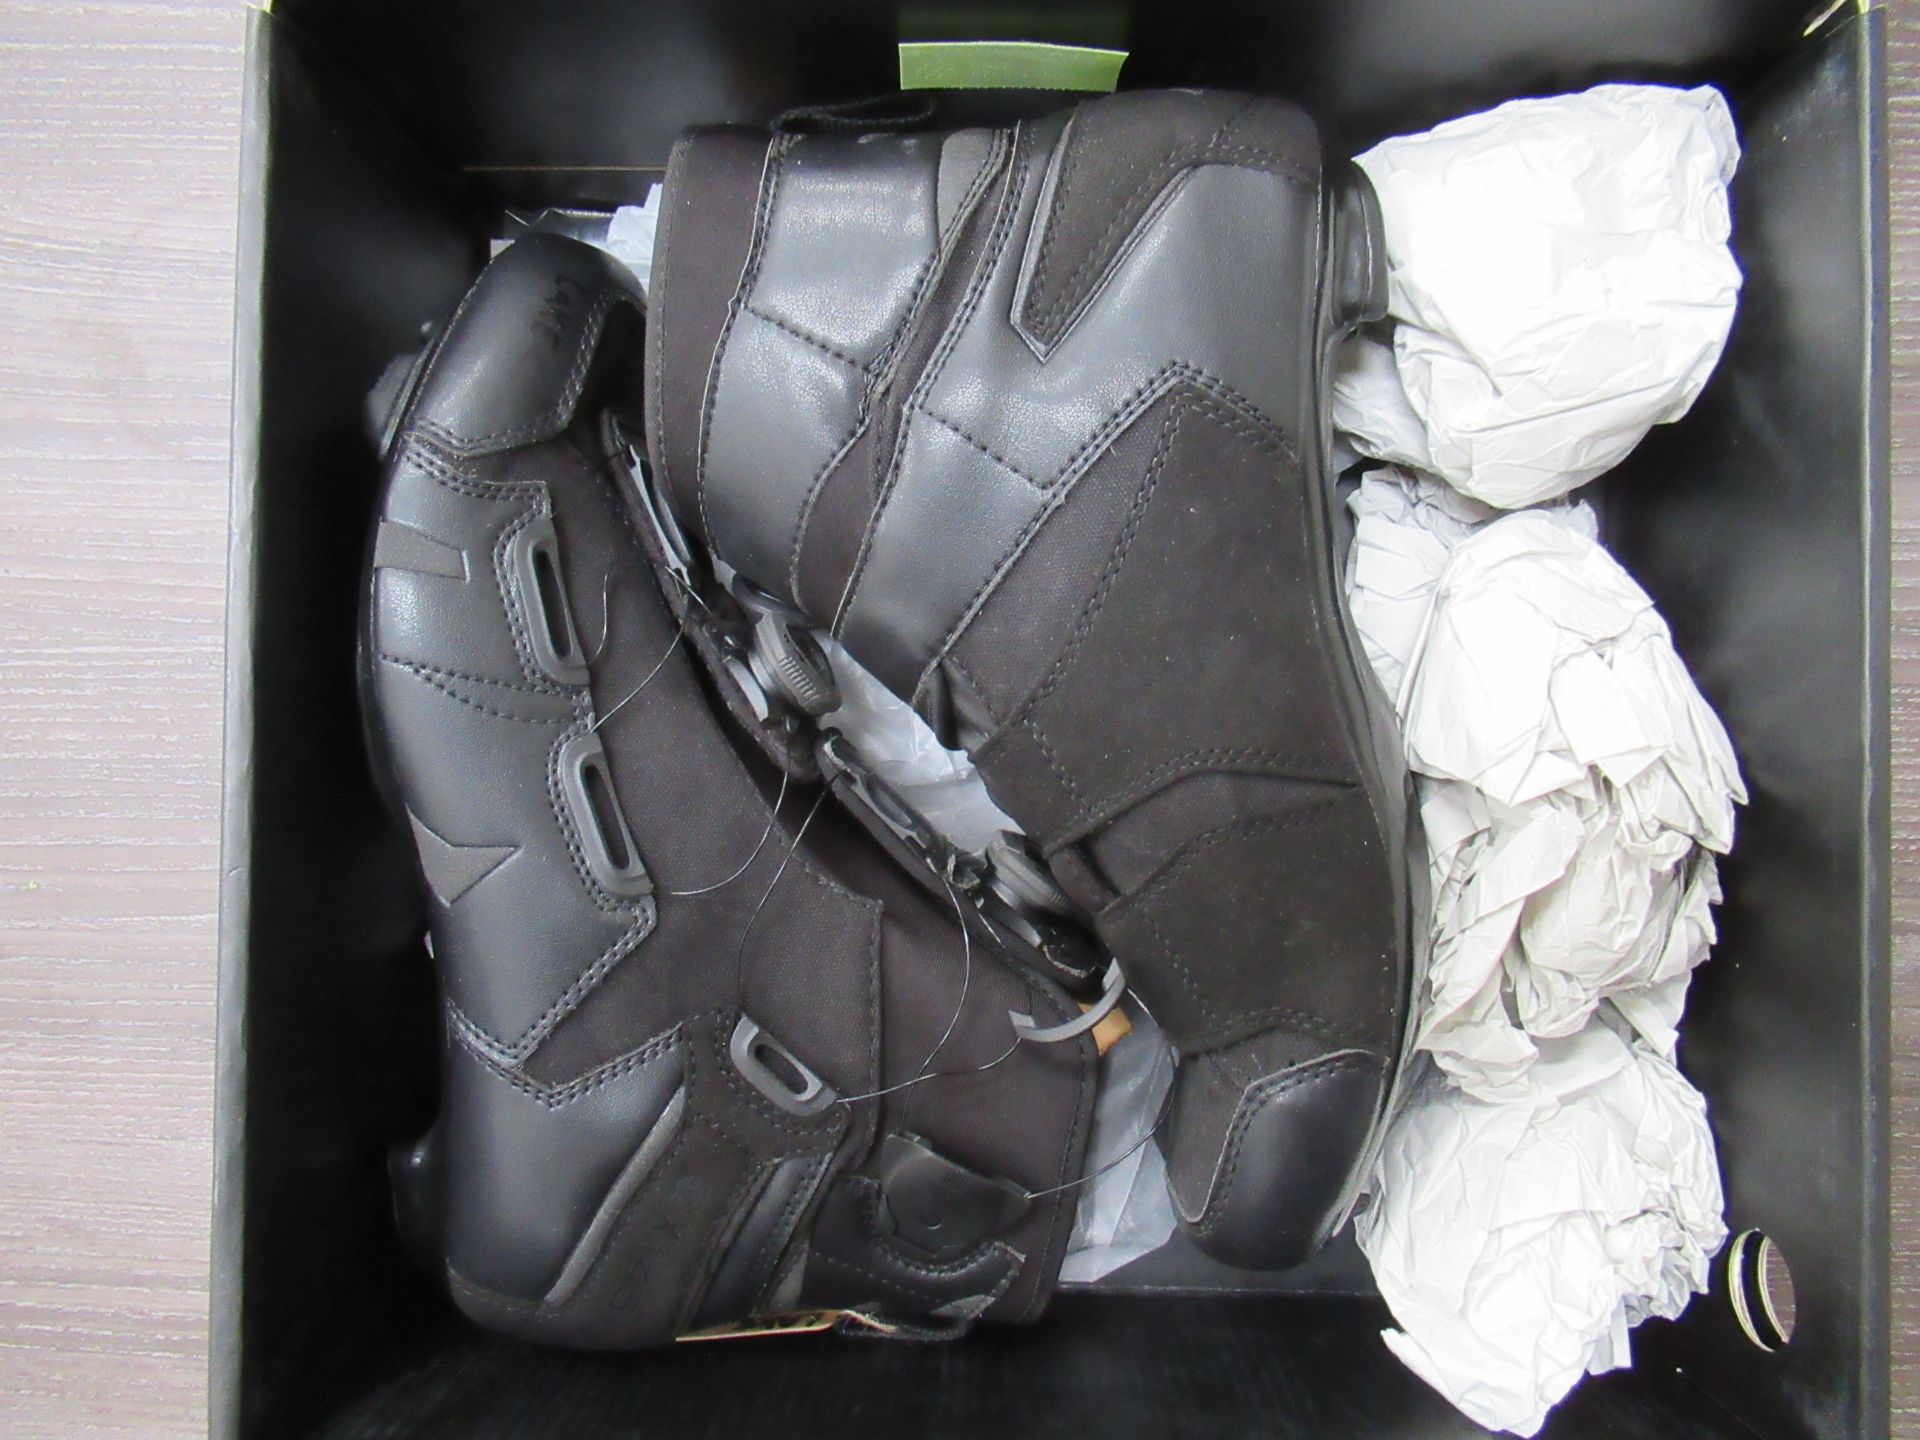 Pair of Lake CX145 cycling shoes (black/black) - boxed EU size 43 (RRP£200) - Image 4 of 4